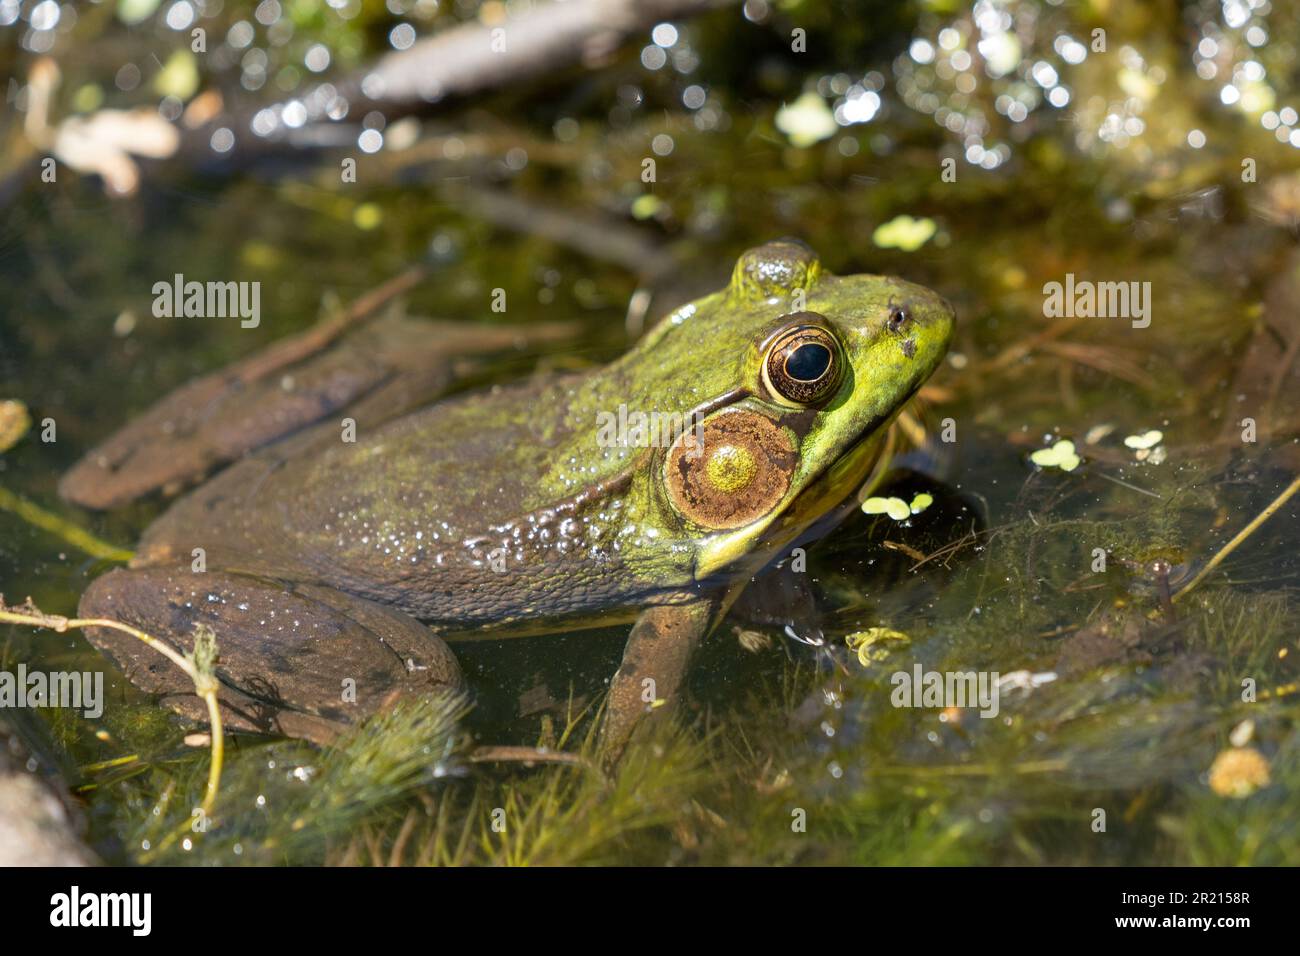 American bullfrog (Lithobates catesbeianus) in pond close-up portrait Stock Photo